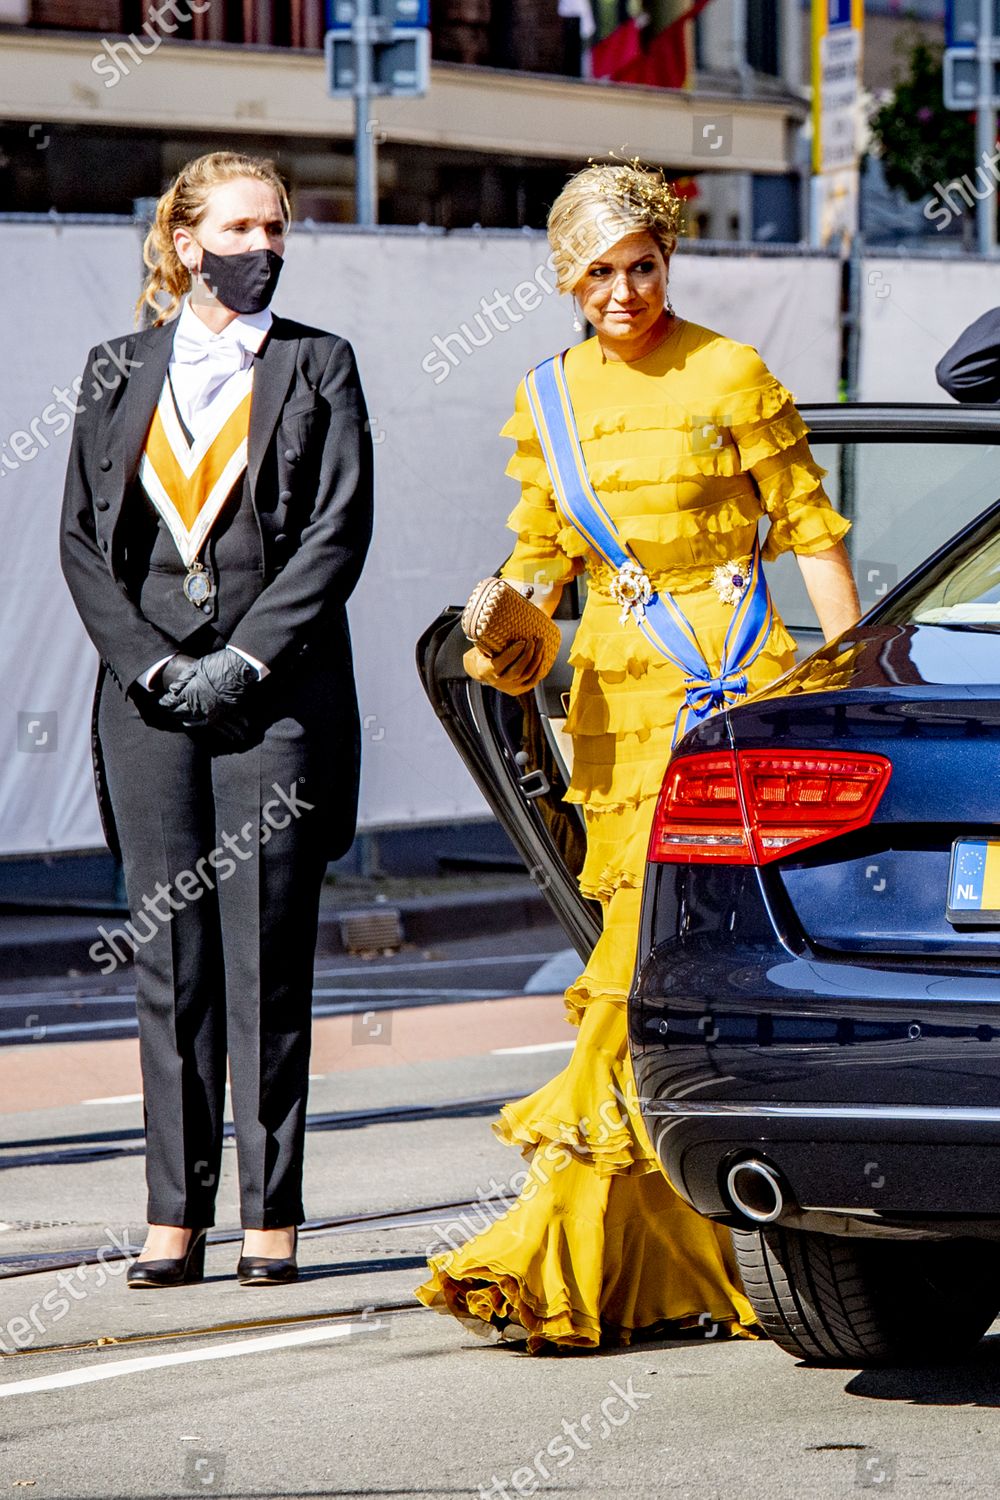 prinsjesdag-ceremony-the-hague-the-netherlands-shutterstock-editorial-10777298q.jpg